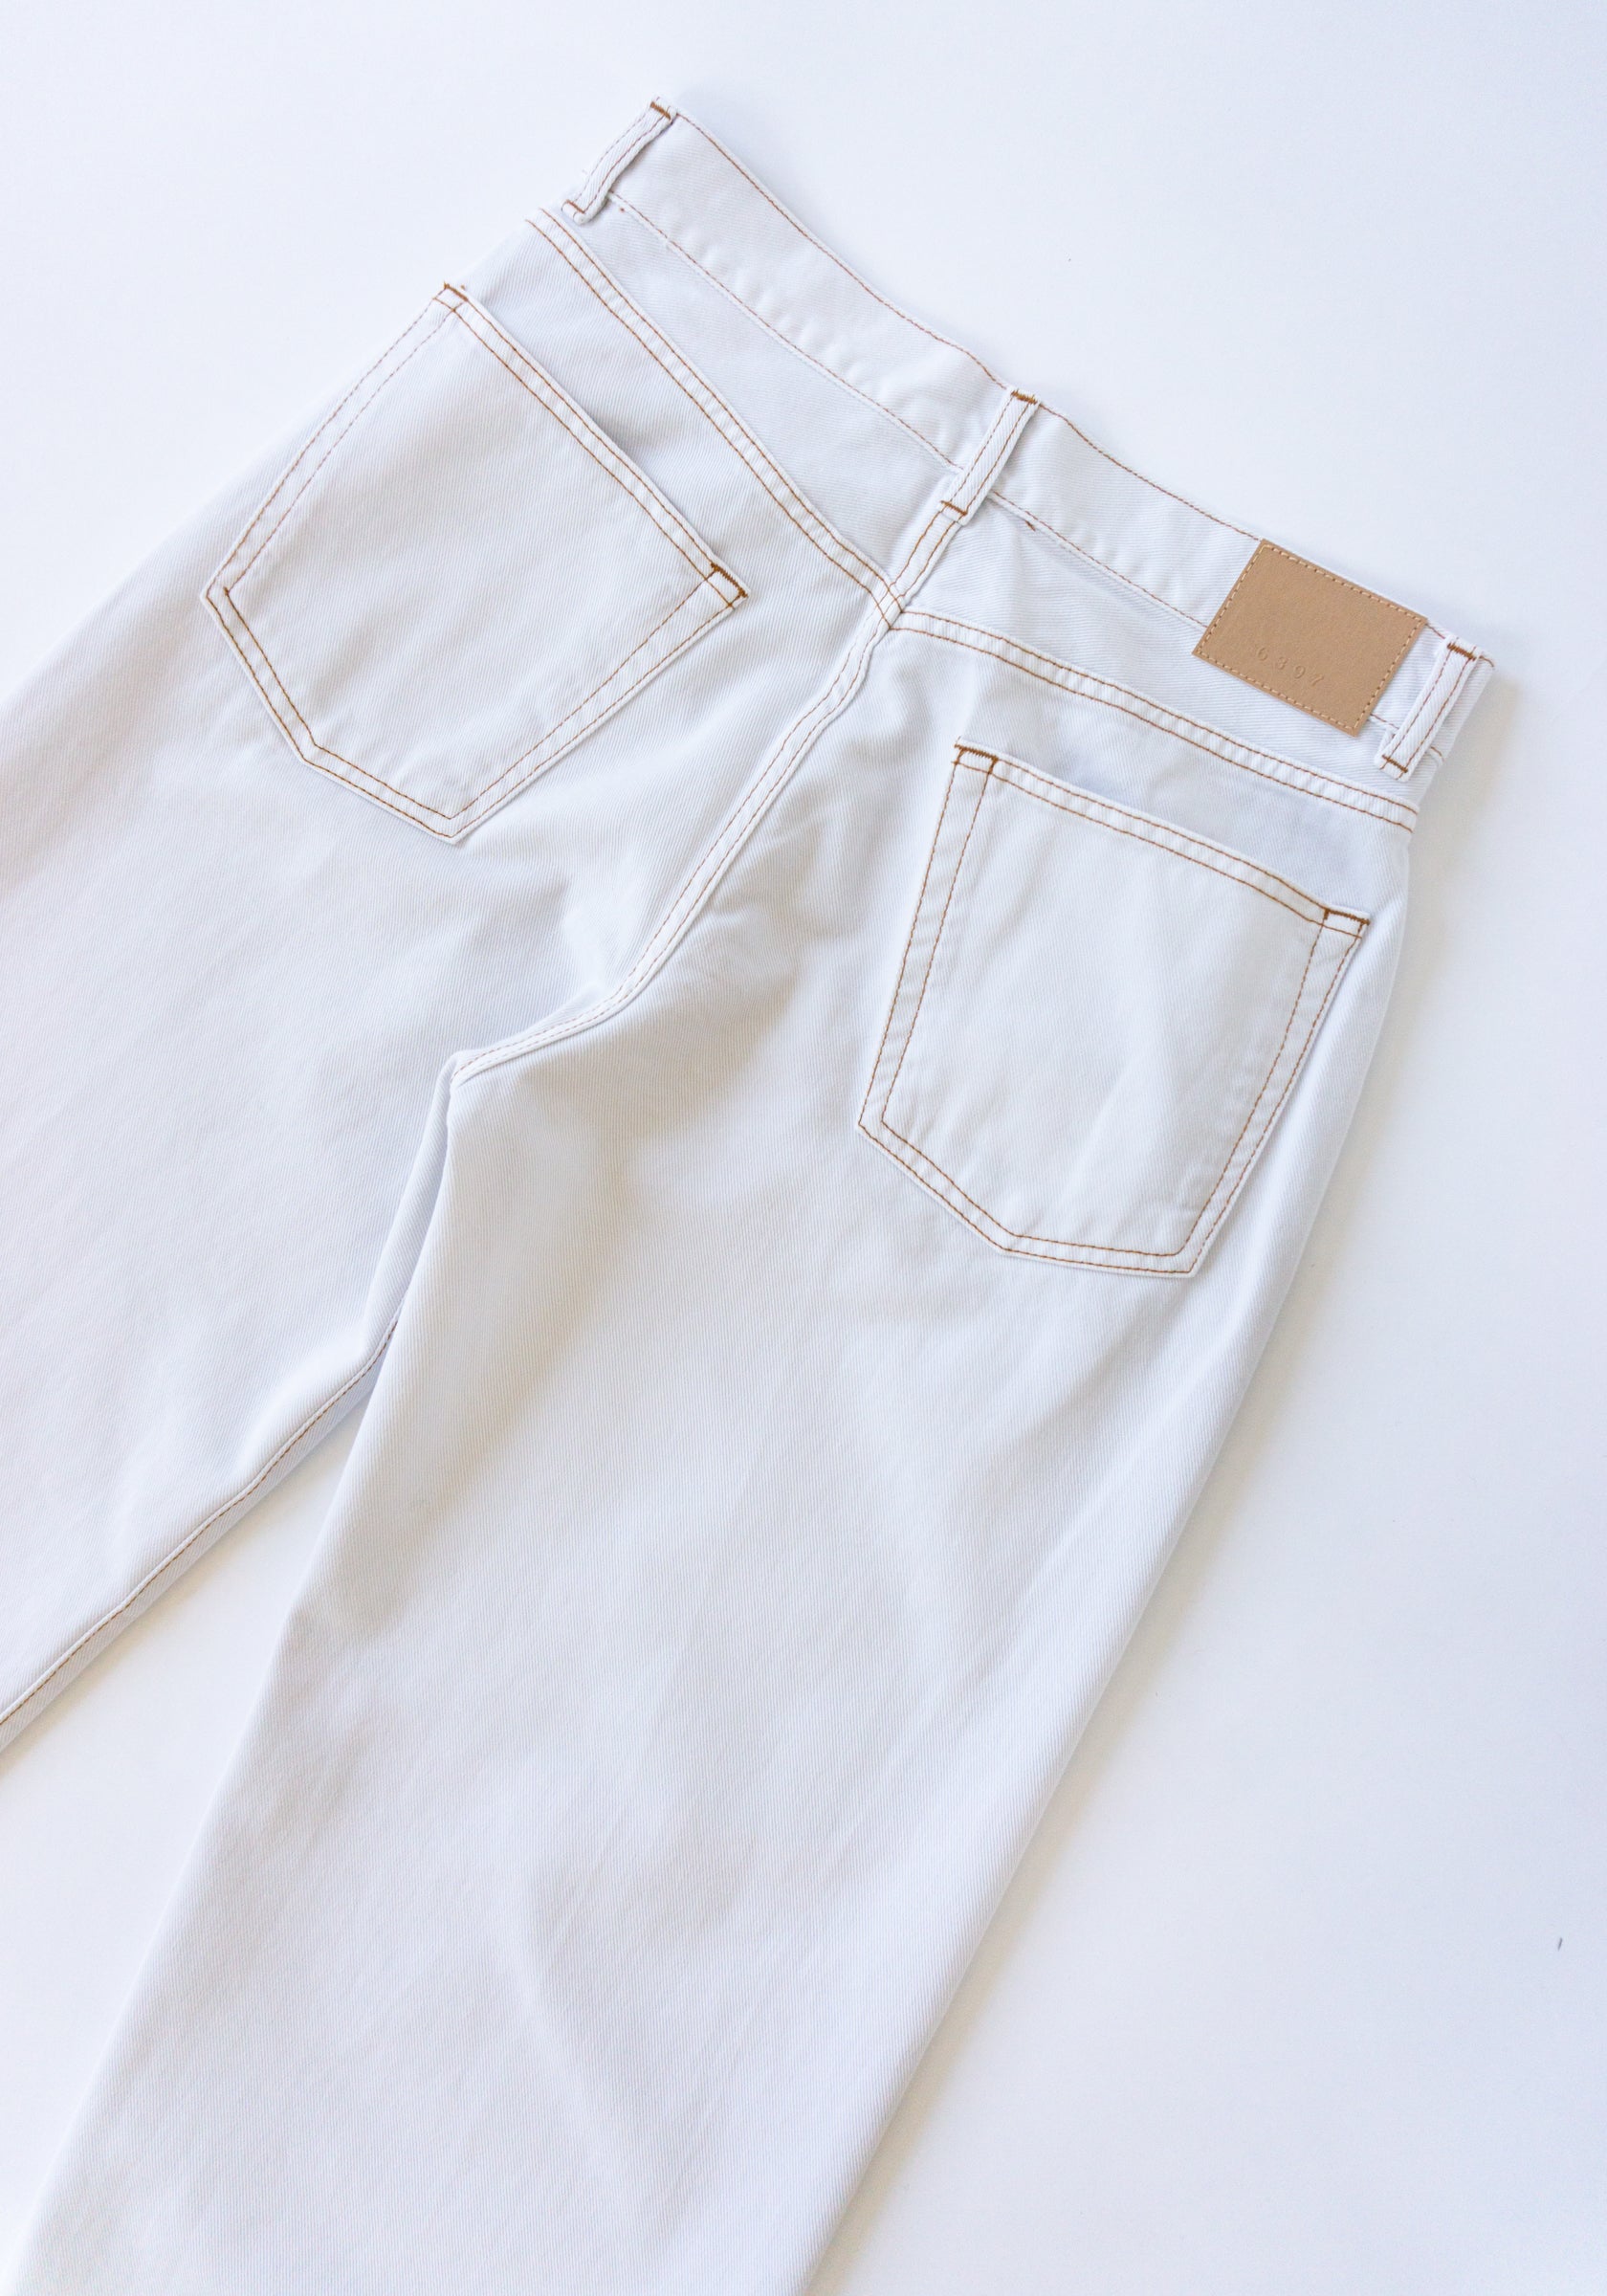 Wide Jean in Chalk White